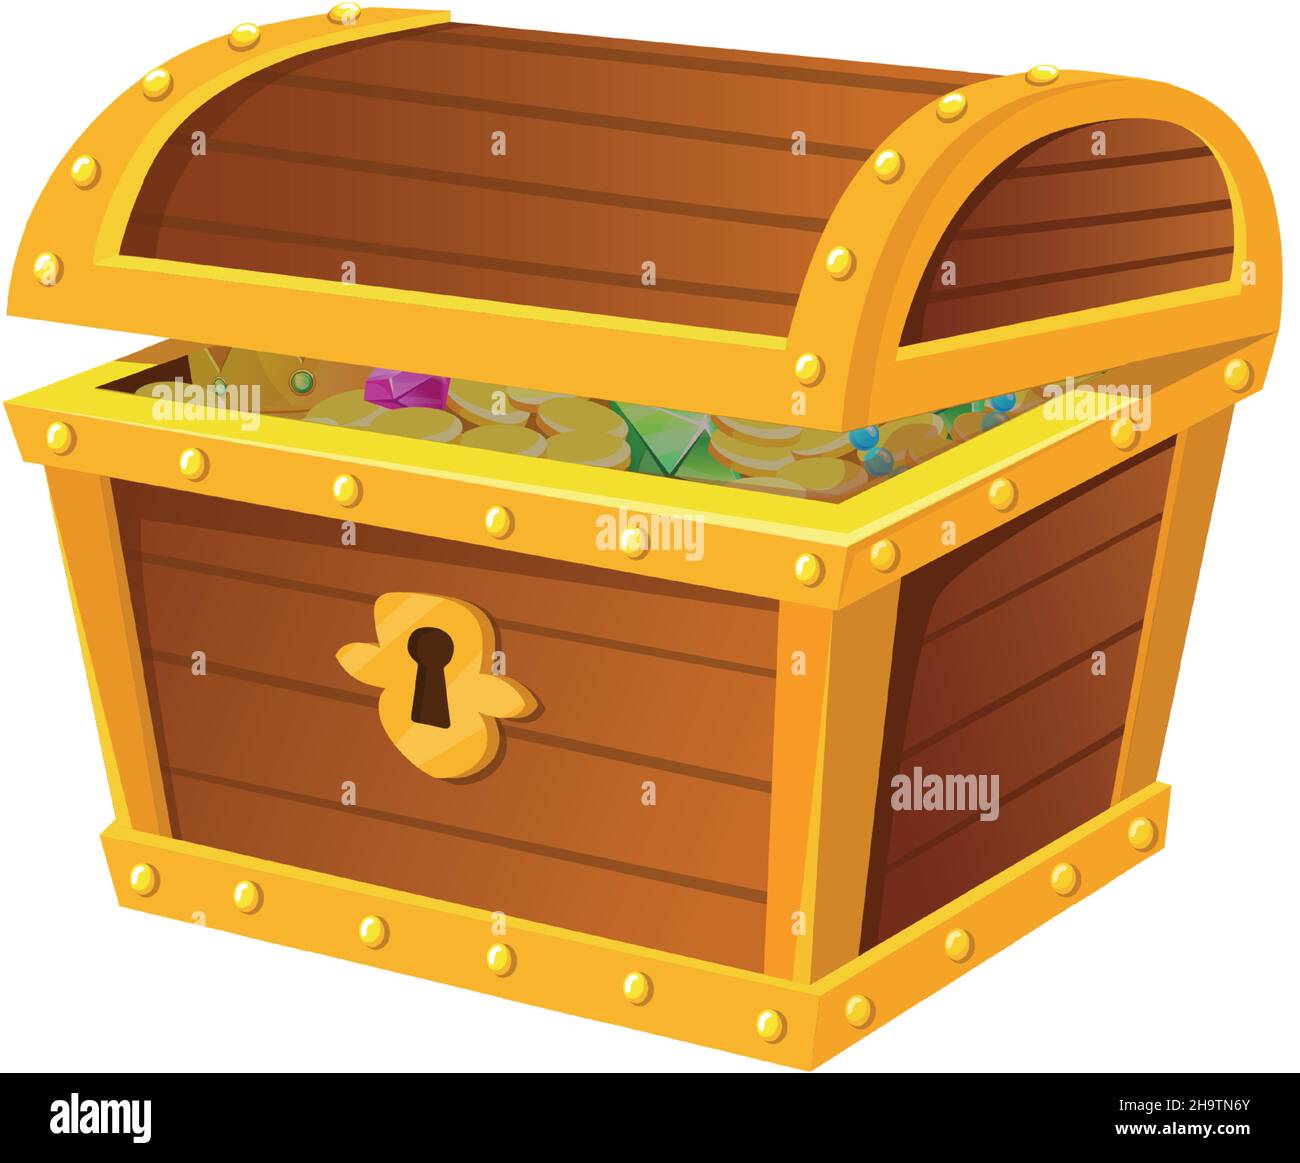 Treasure chest PNG and Clipart  Treasure jewelry, Treasure chest, Gold  money